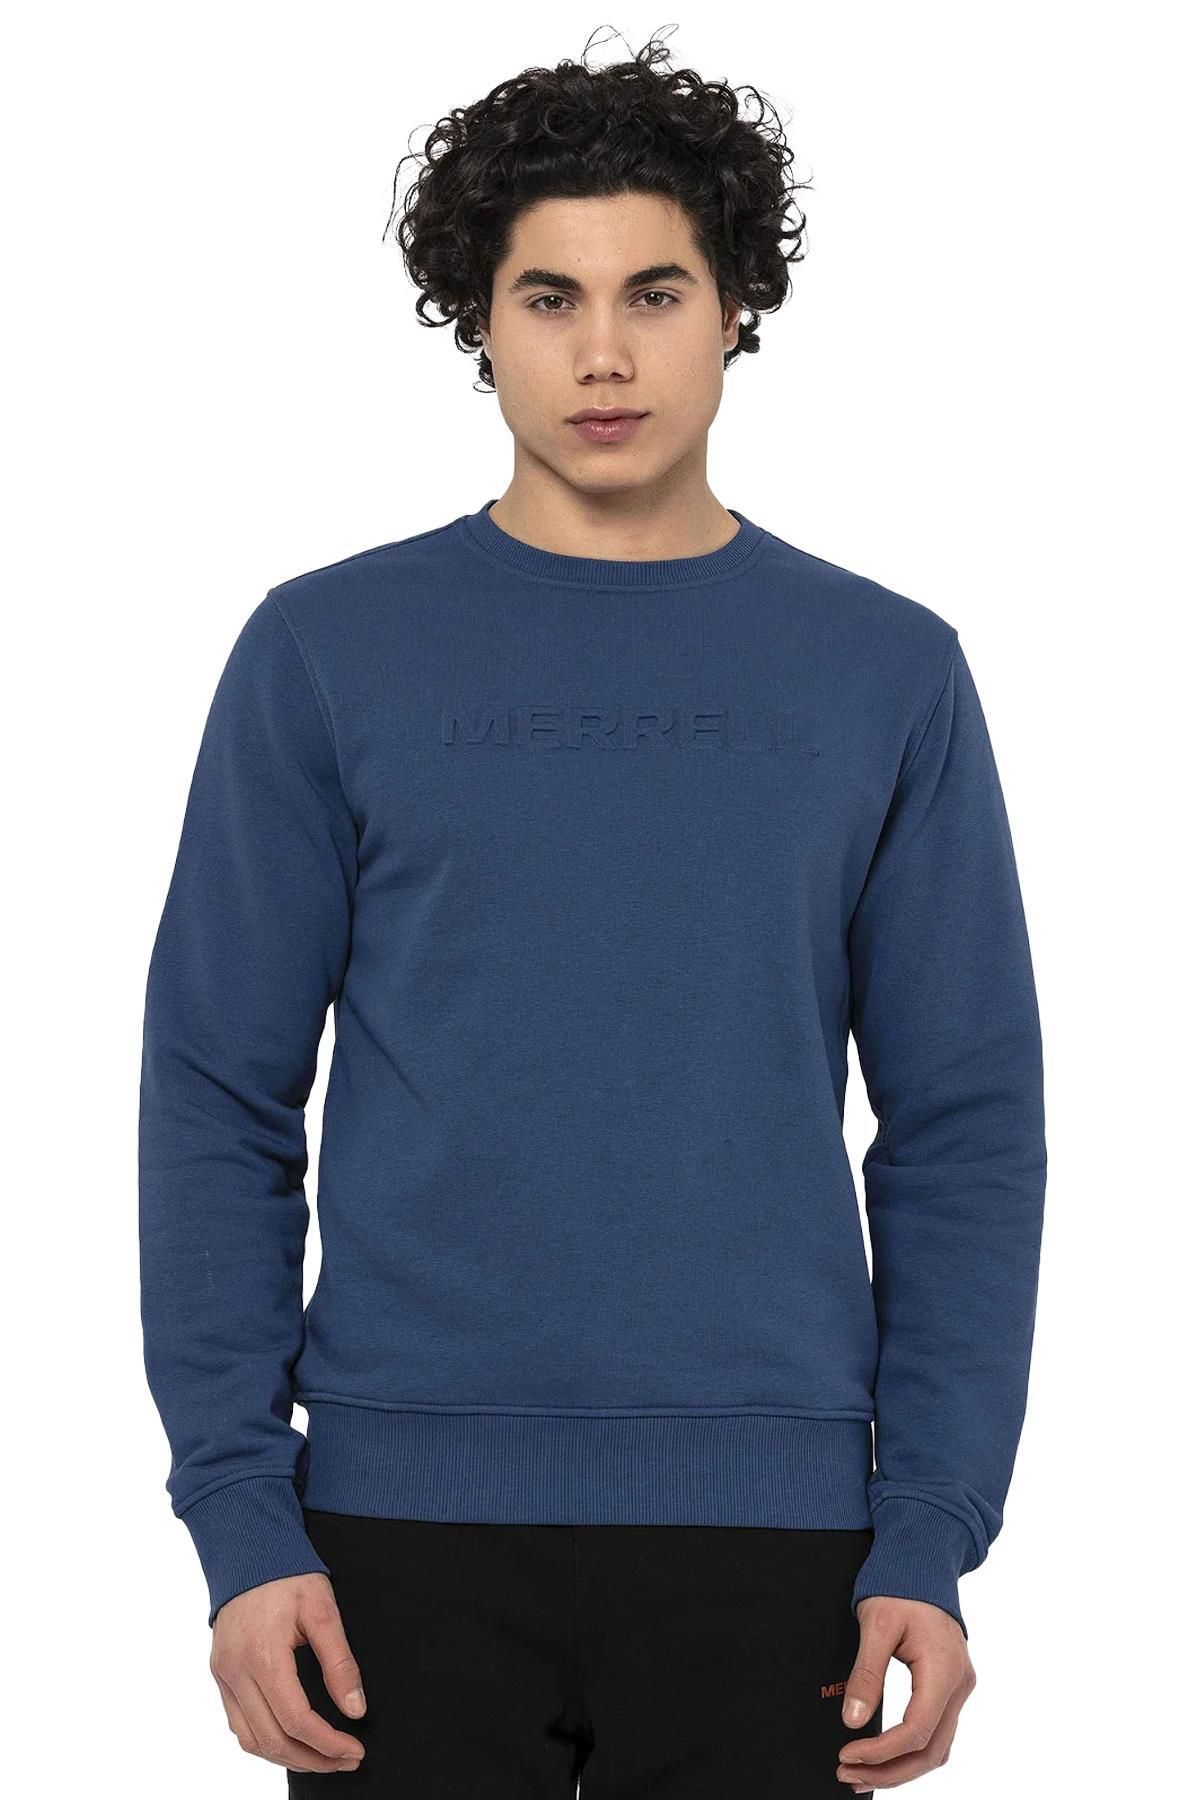 Merrell Simple Erkek Sweatshirt M23sımple